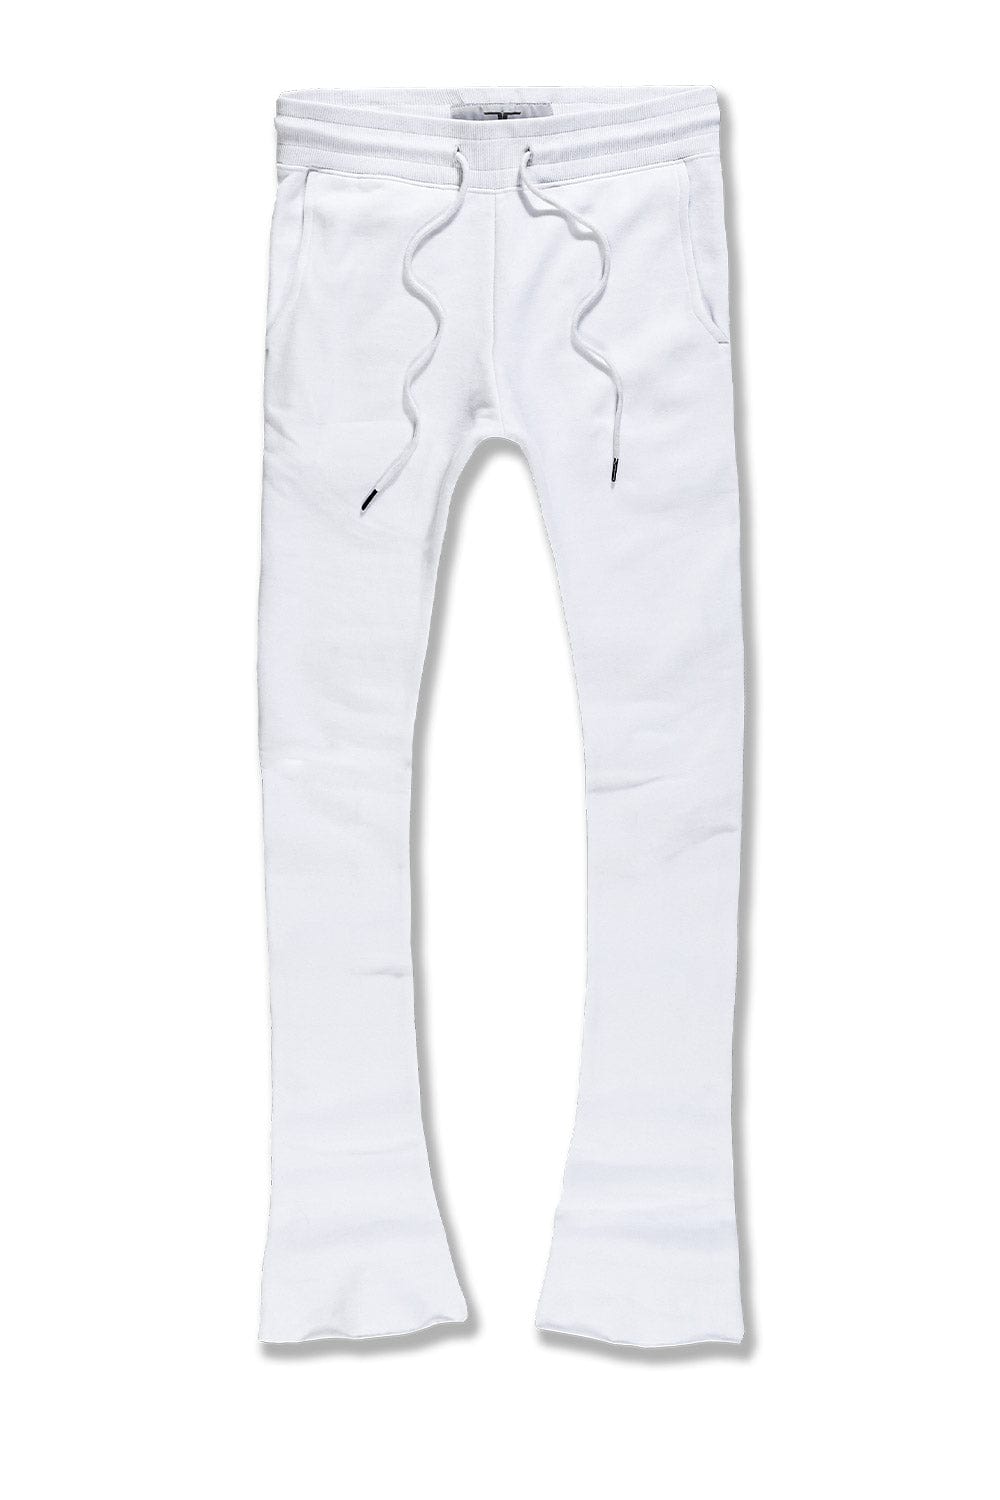 Jordan Craig Uptown Stacked Sweatpants (White) White / S